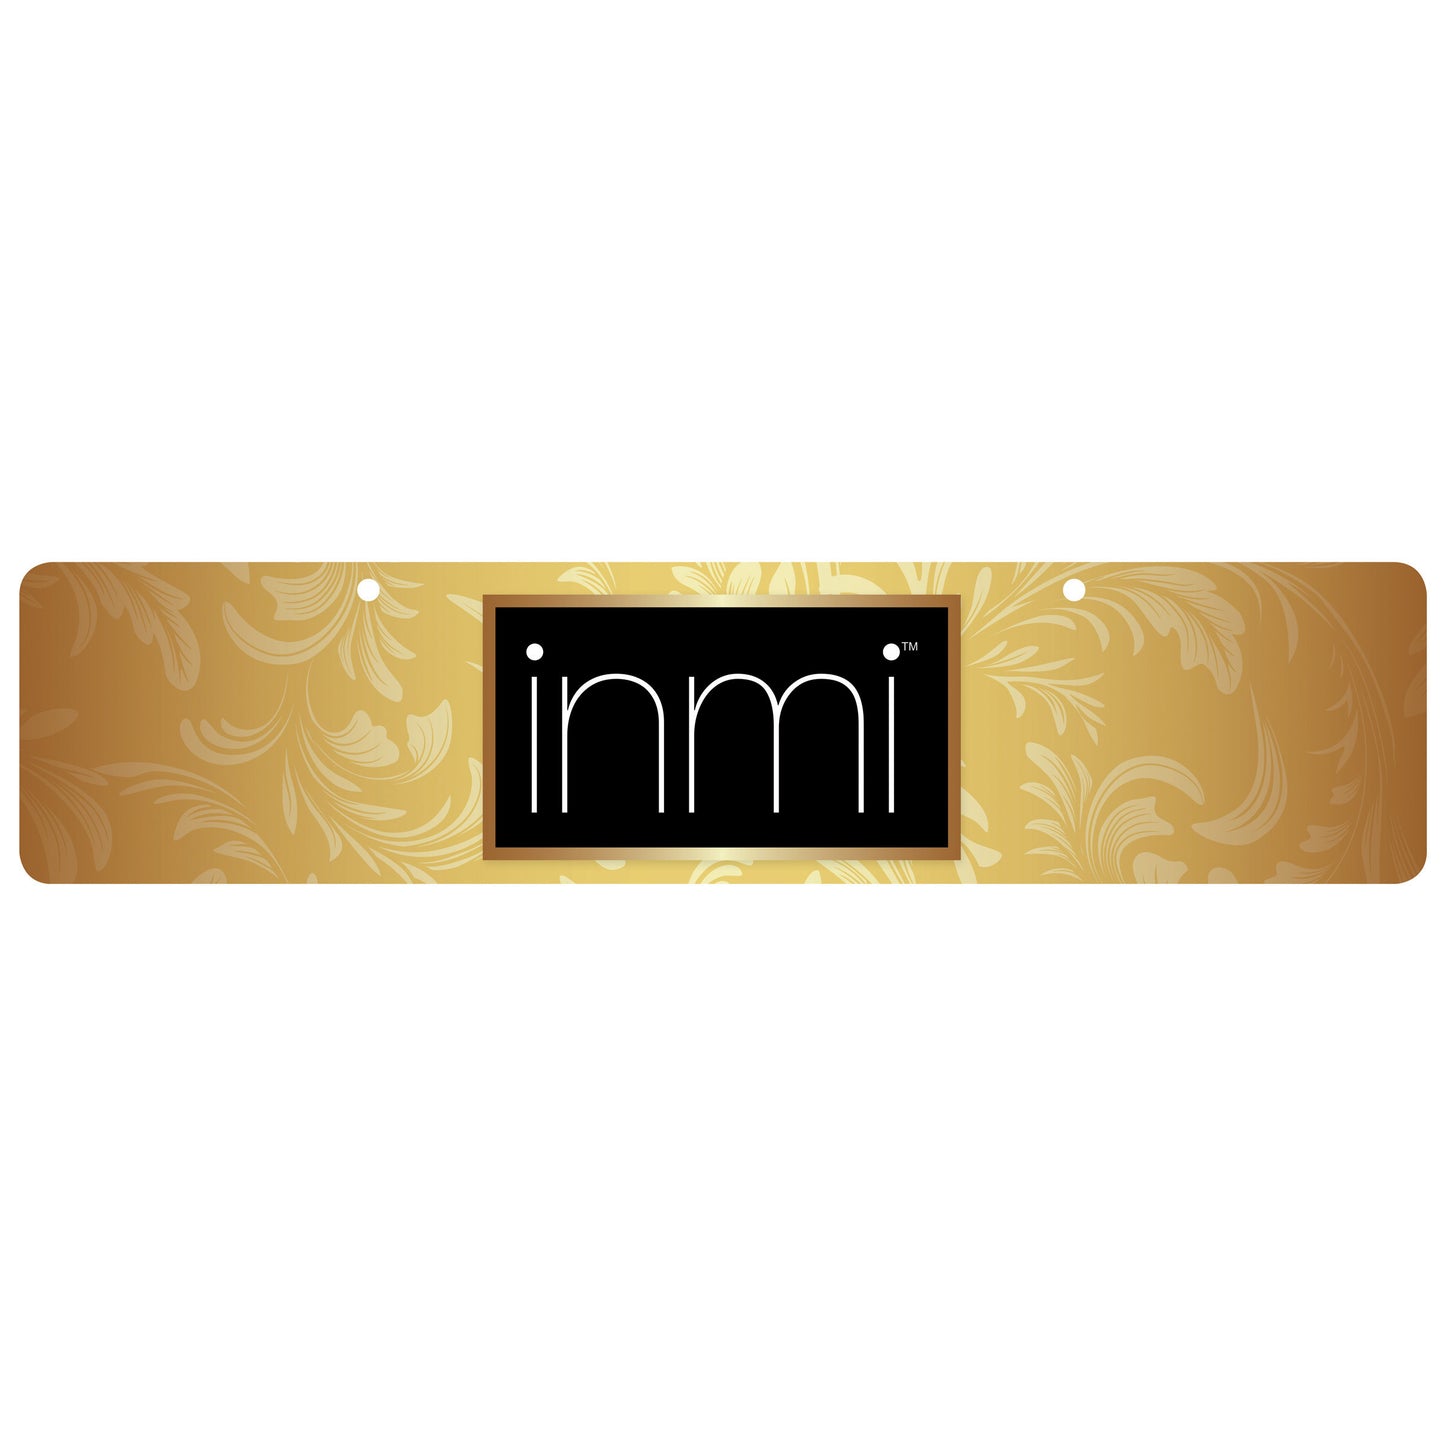 INMI Display Sign - UABDSM